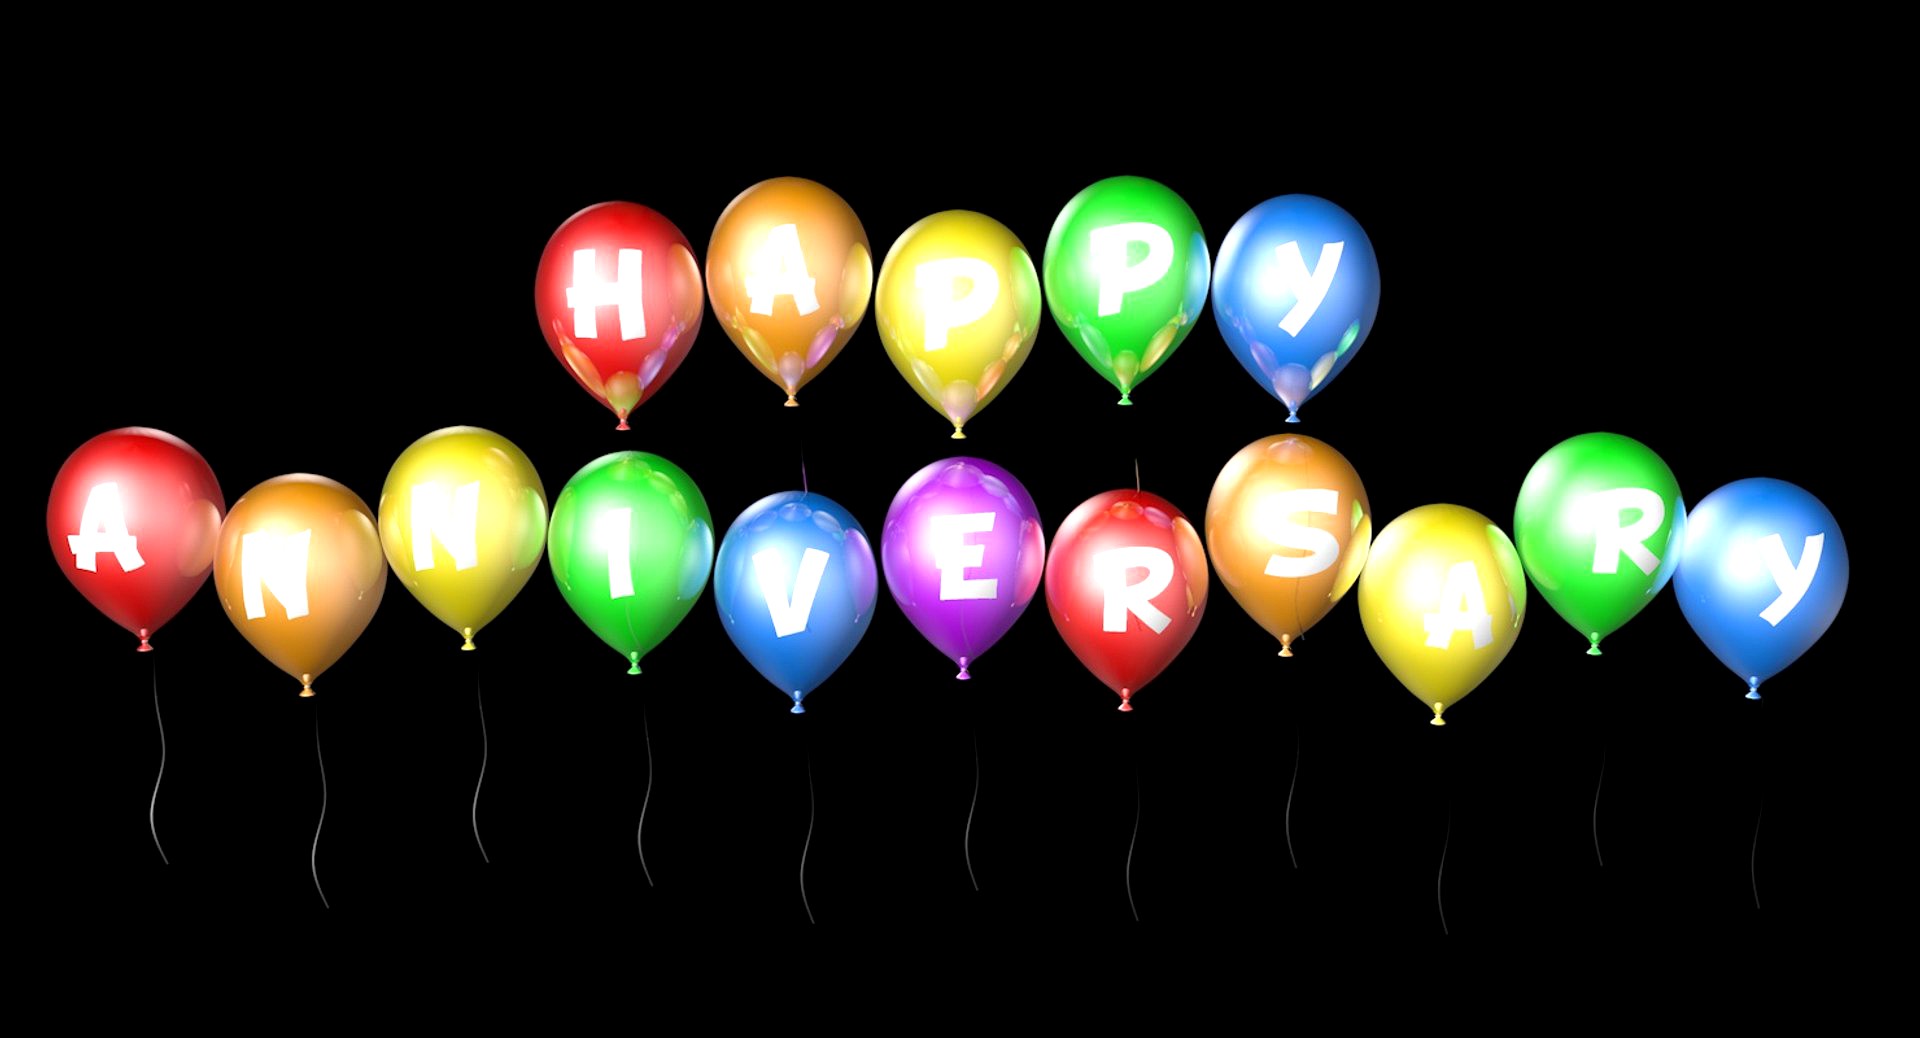 Balloons - Happy Anniversary